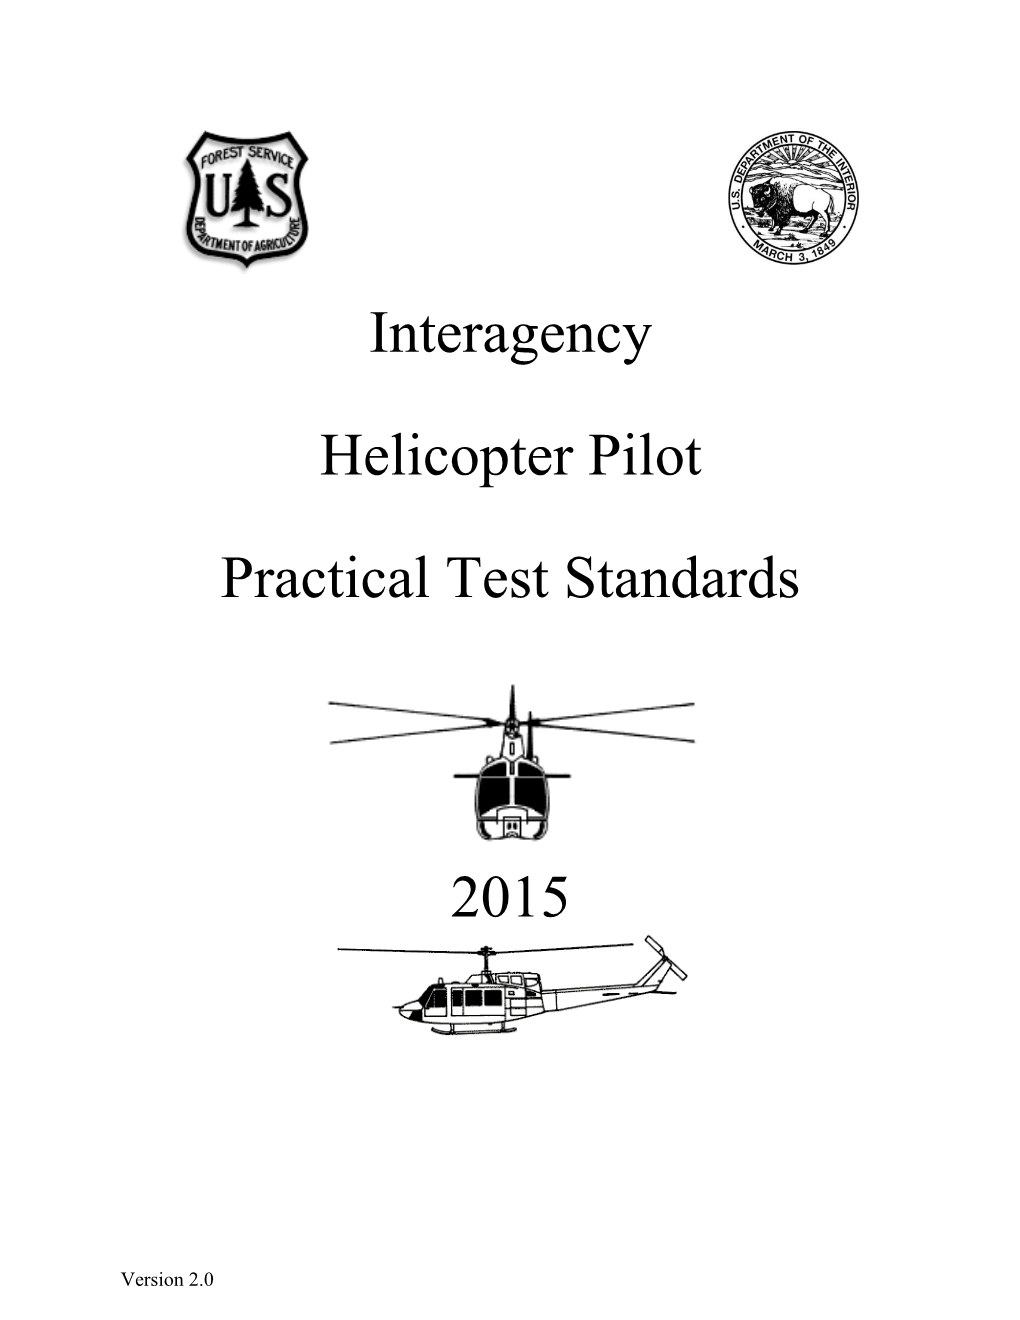 Interagency Helicopter Pilot Practical Test Standards 2015